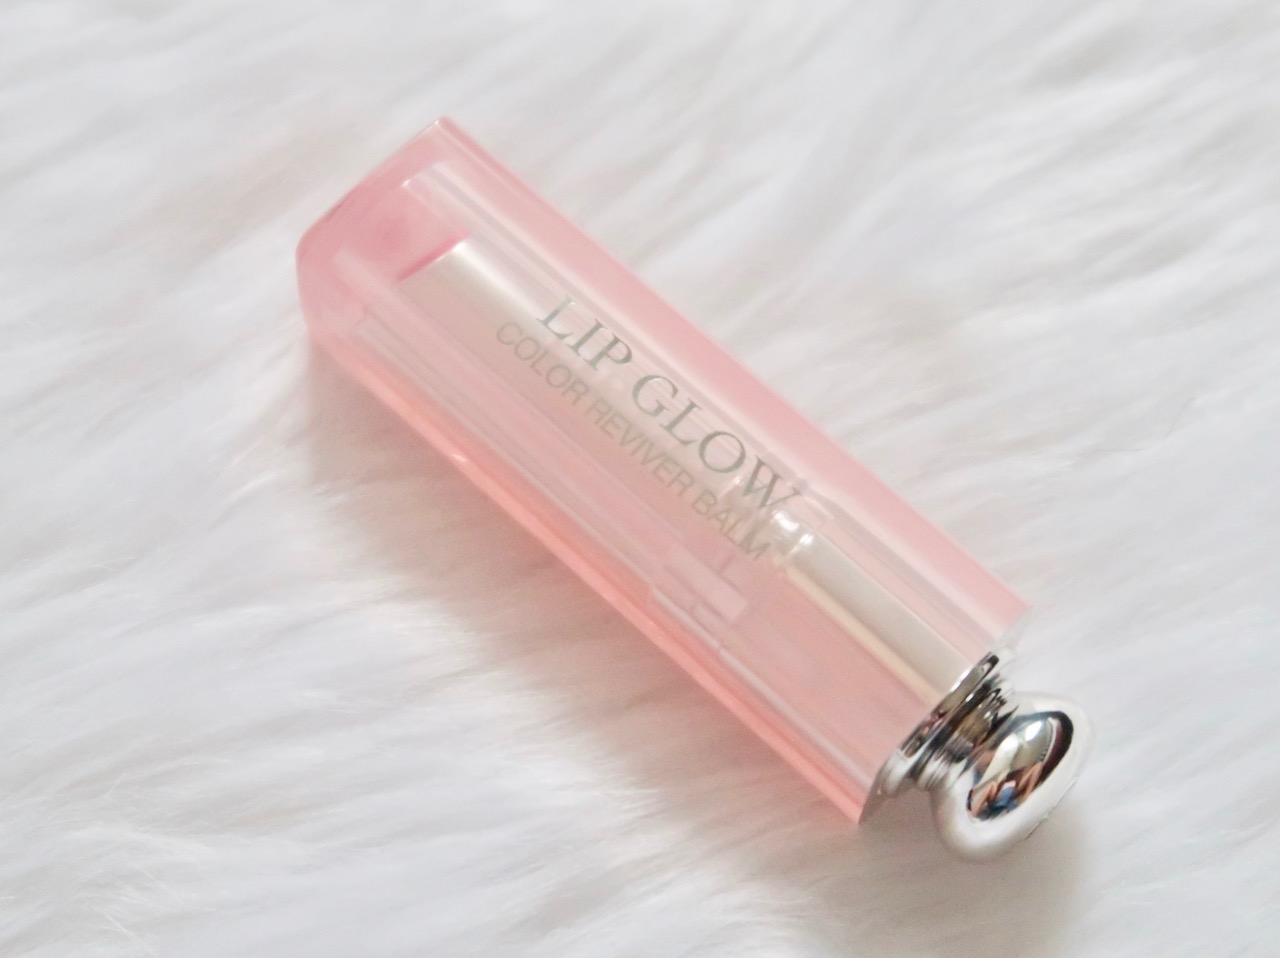 Dior Addict Lip Glow Lip Balm: HG lip balm to date!